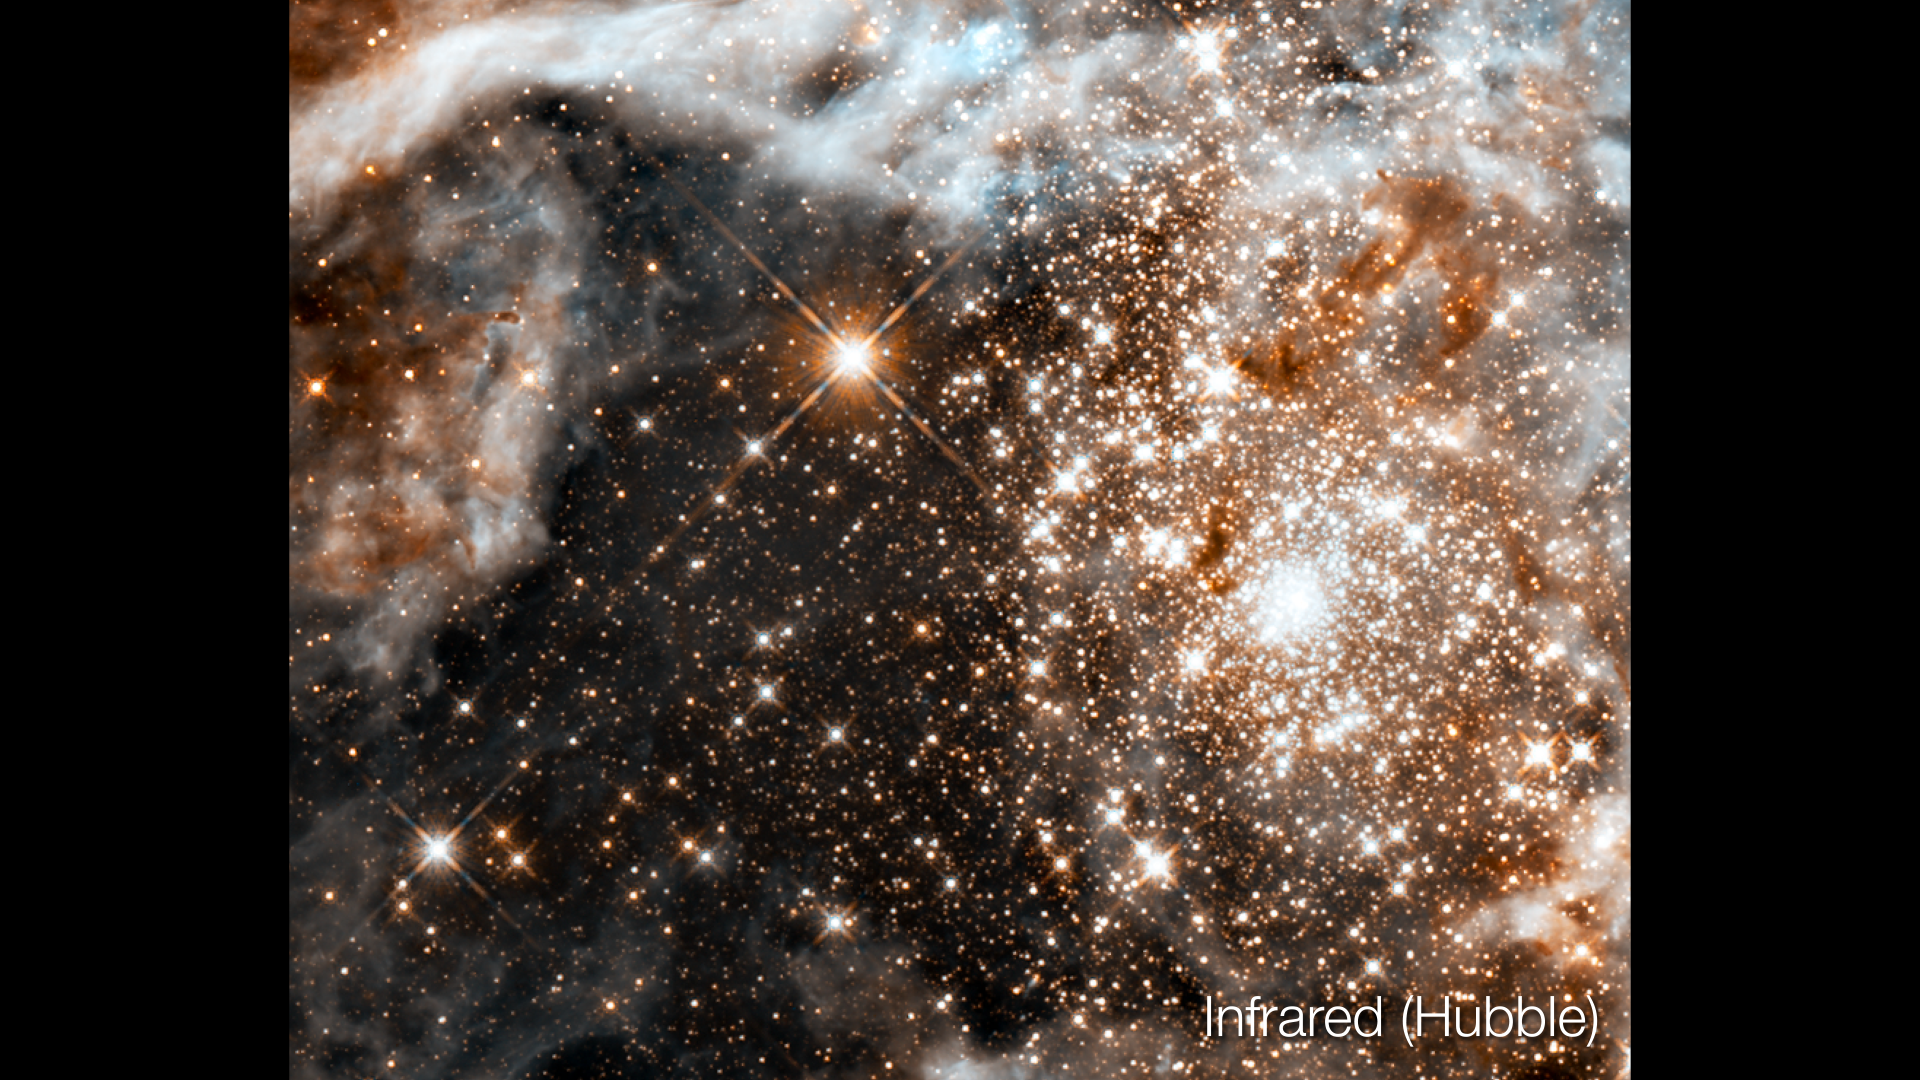 Preview Image for 30 Doradus: A Massive Star-Forming Region